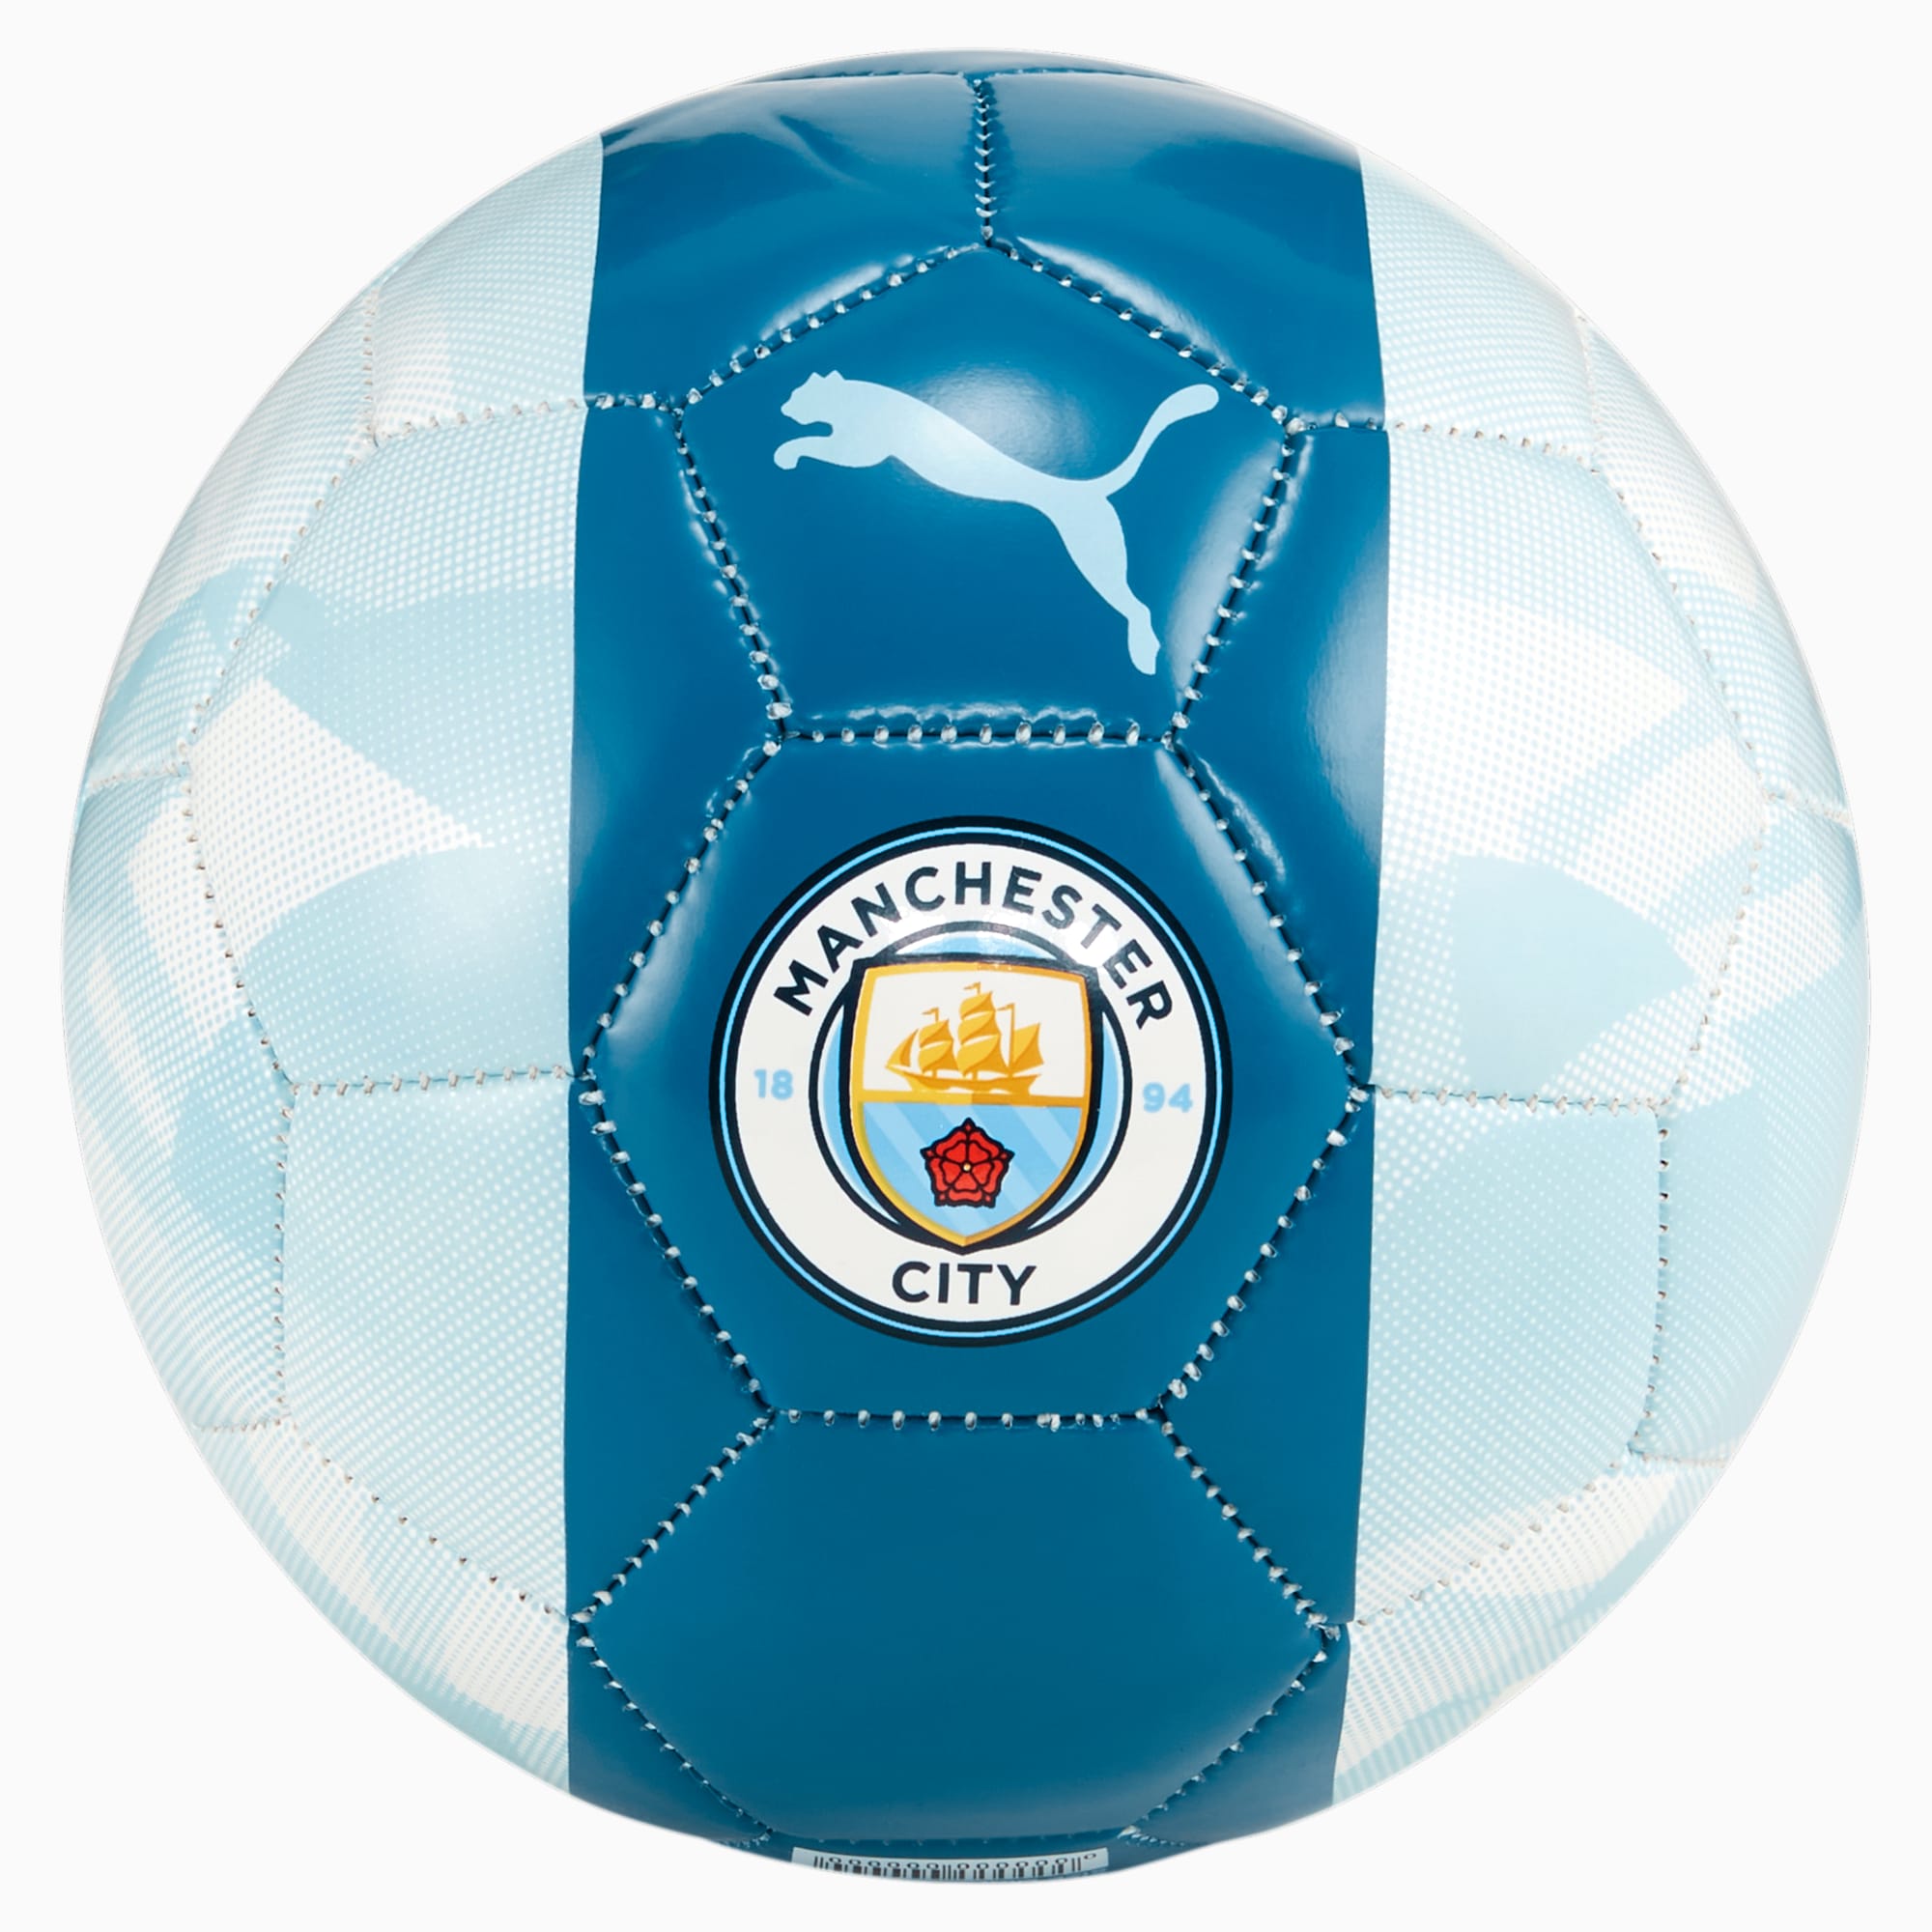 PUMA Manchester City FtblCore Mini-Fußball, Silber/Blau, Größe: Mini